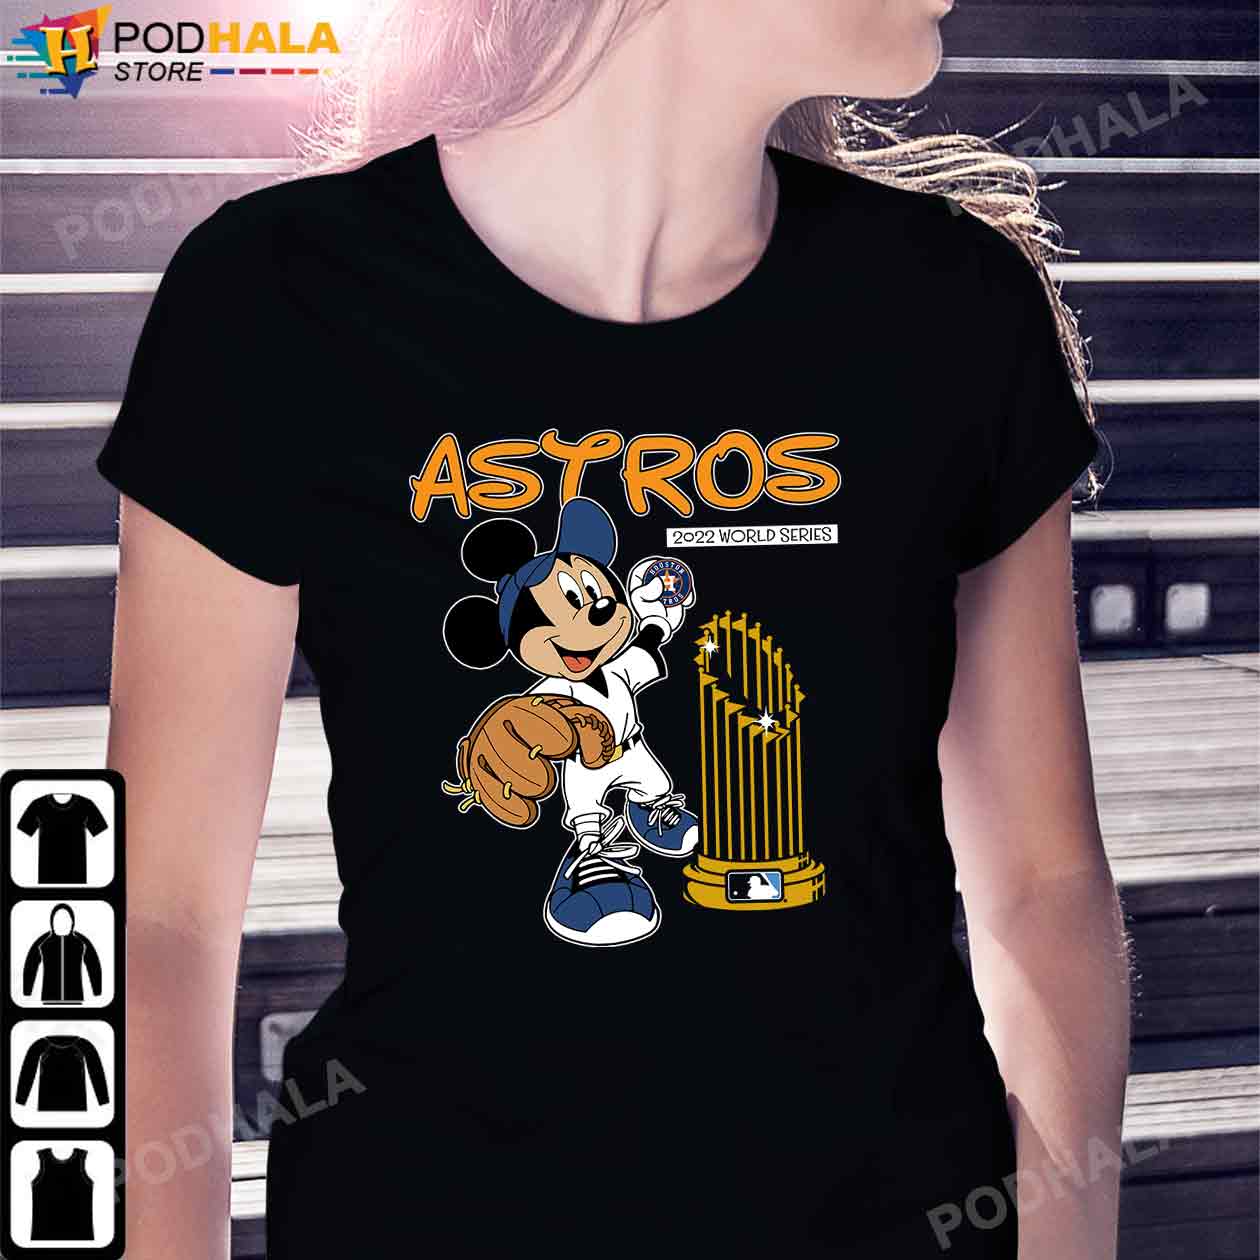 astros world series t shirt 2022